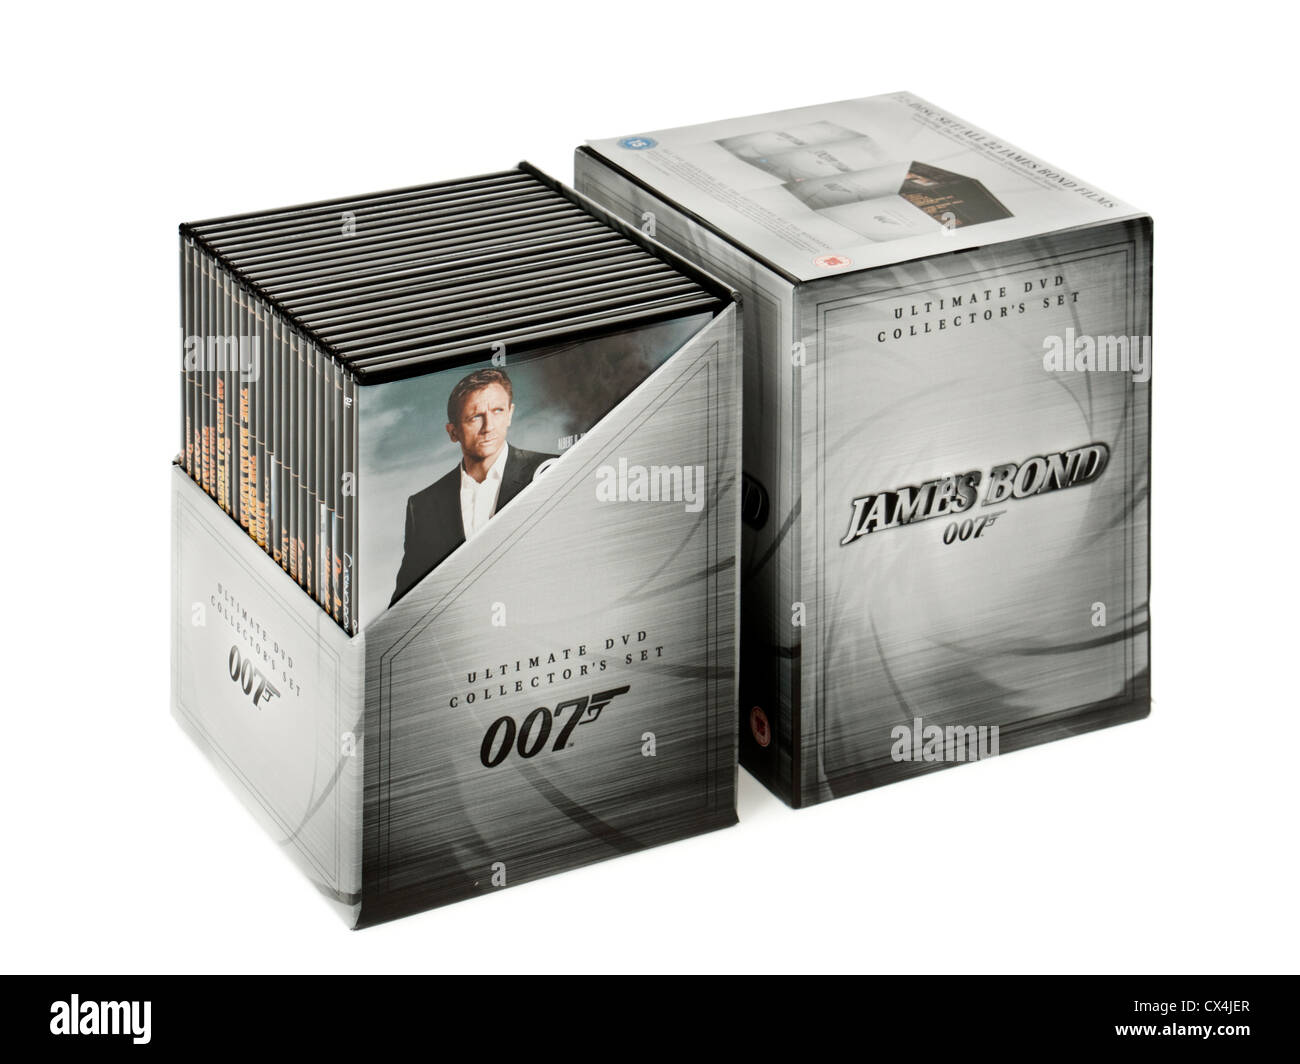 James Bond (007) Ultimate DVD Collector's Box Set Foto stock - Alamy